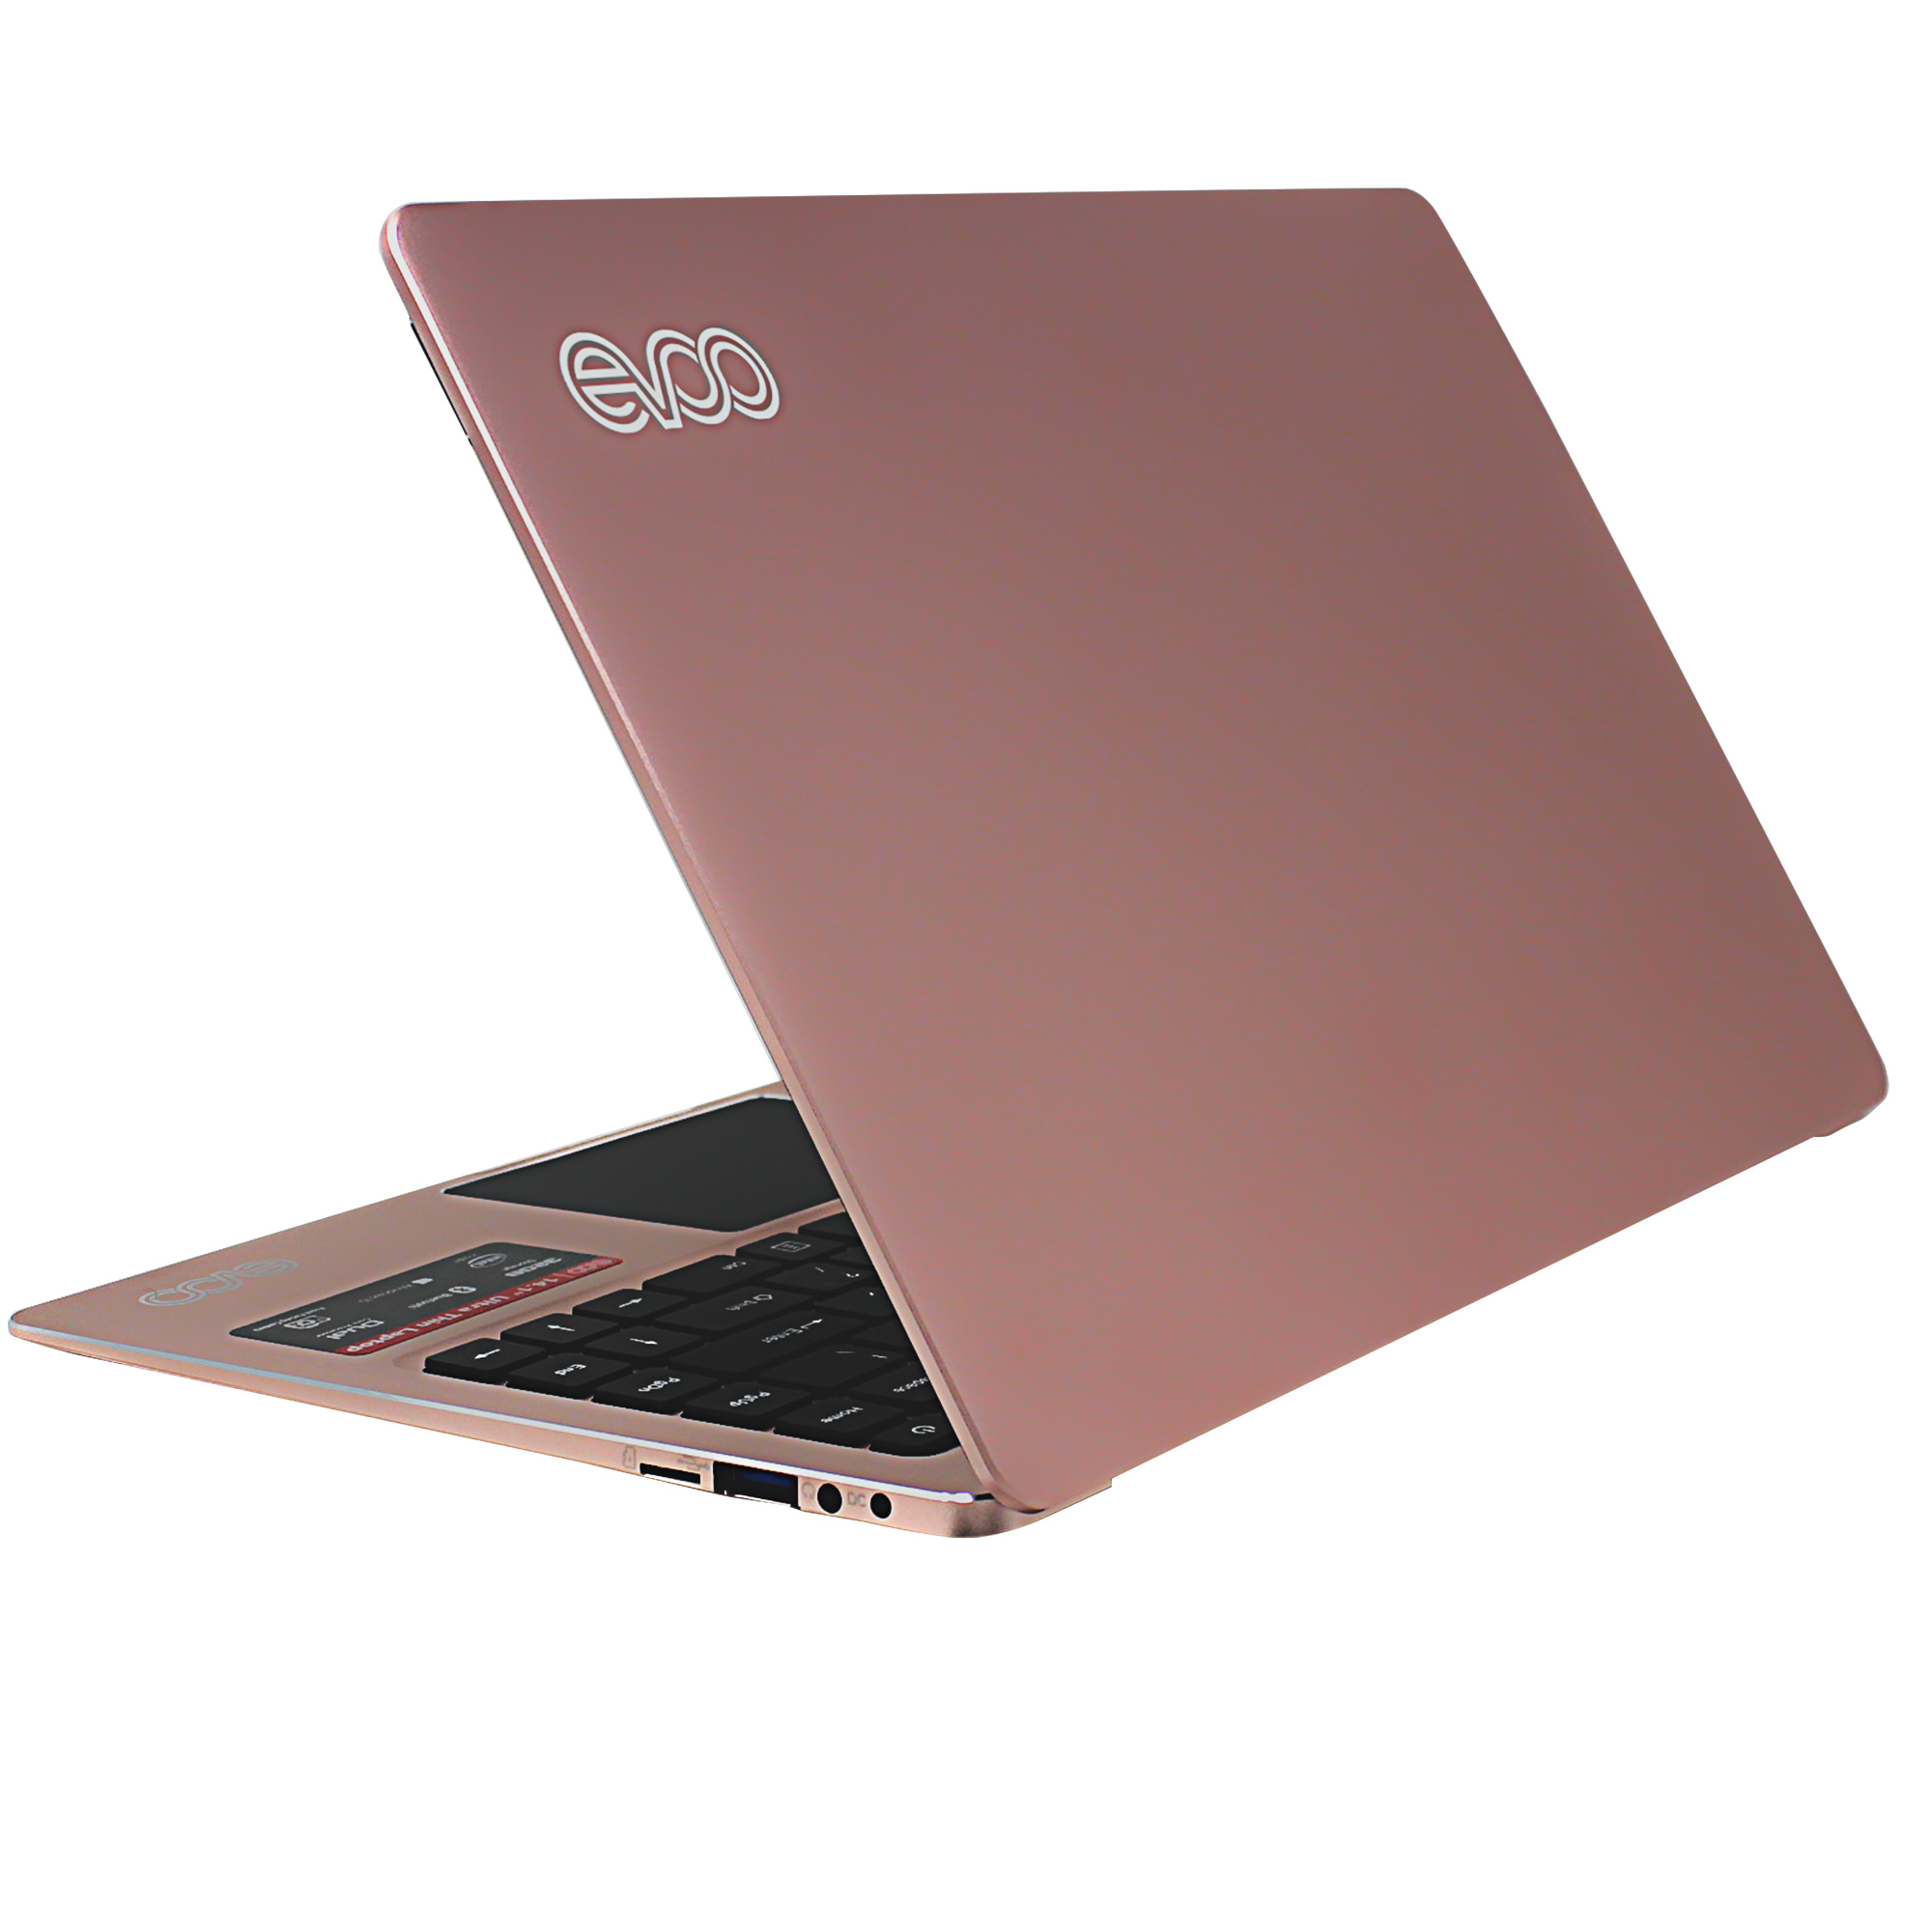 EVOO 14.1" Ultra Thin Laptop - Elite Series, Intel Celeron CPU, 4GB Memory, 32GB, Windows 10 S, Windows Hello (Fingerprint Scanner), Rose Gold - image 3 of 5